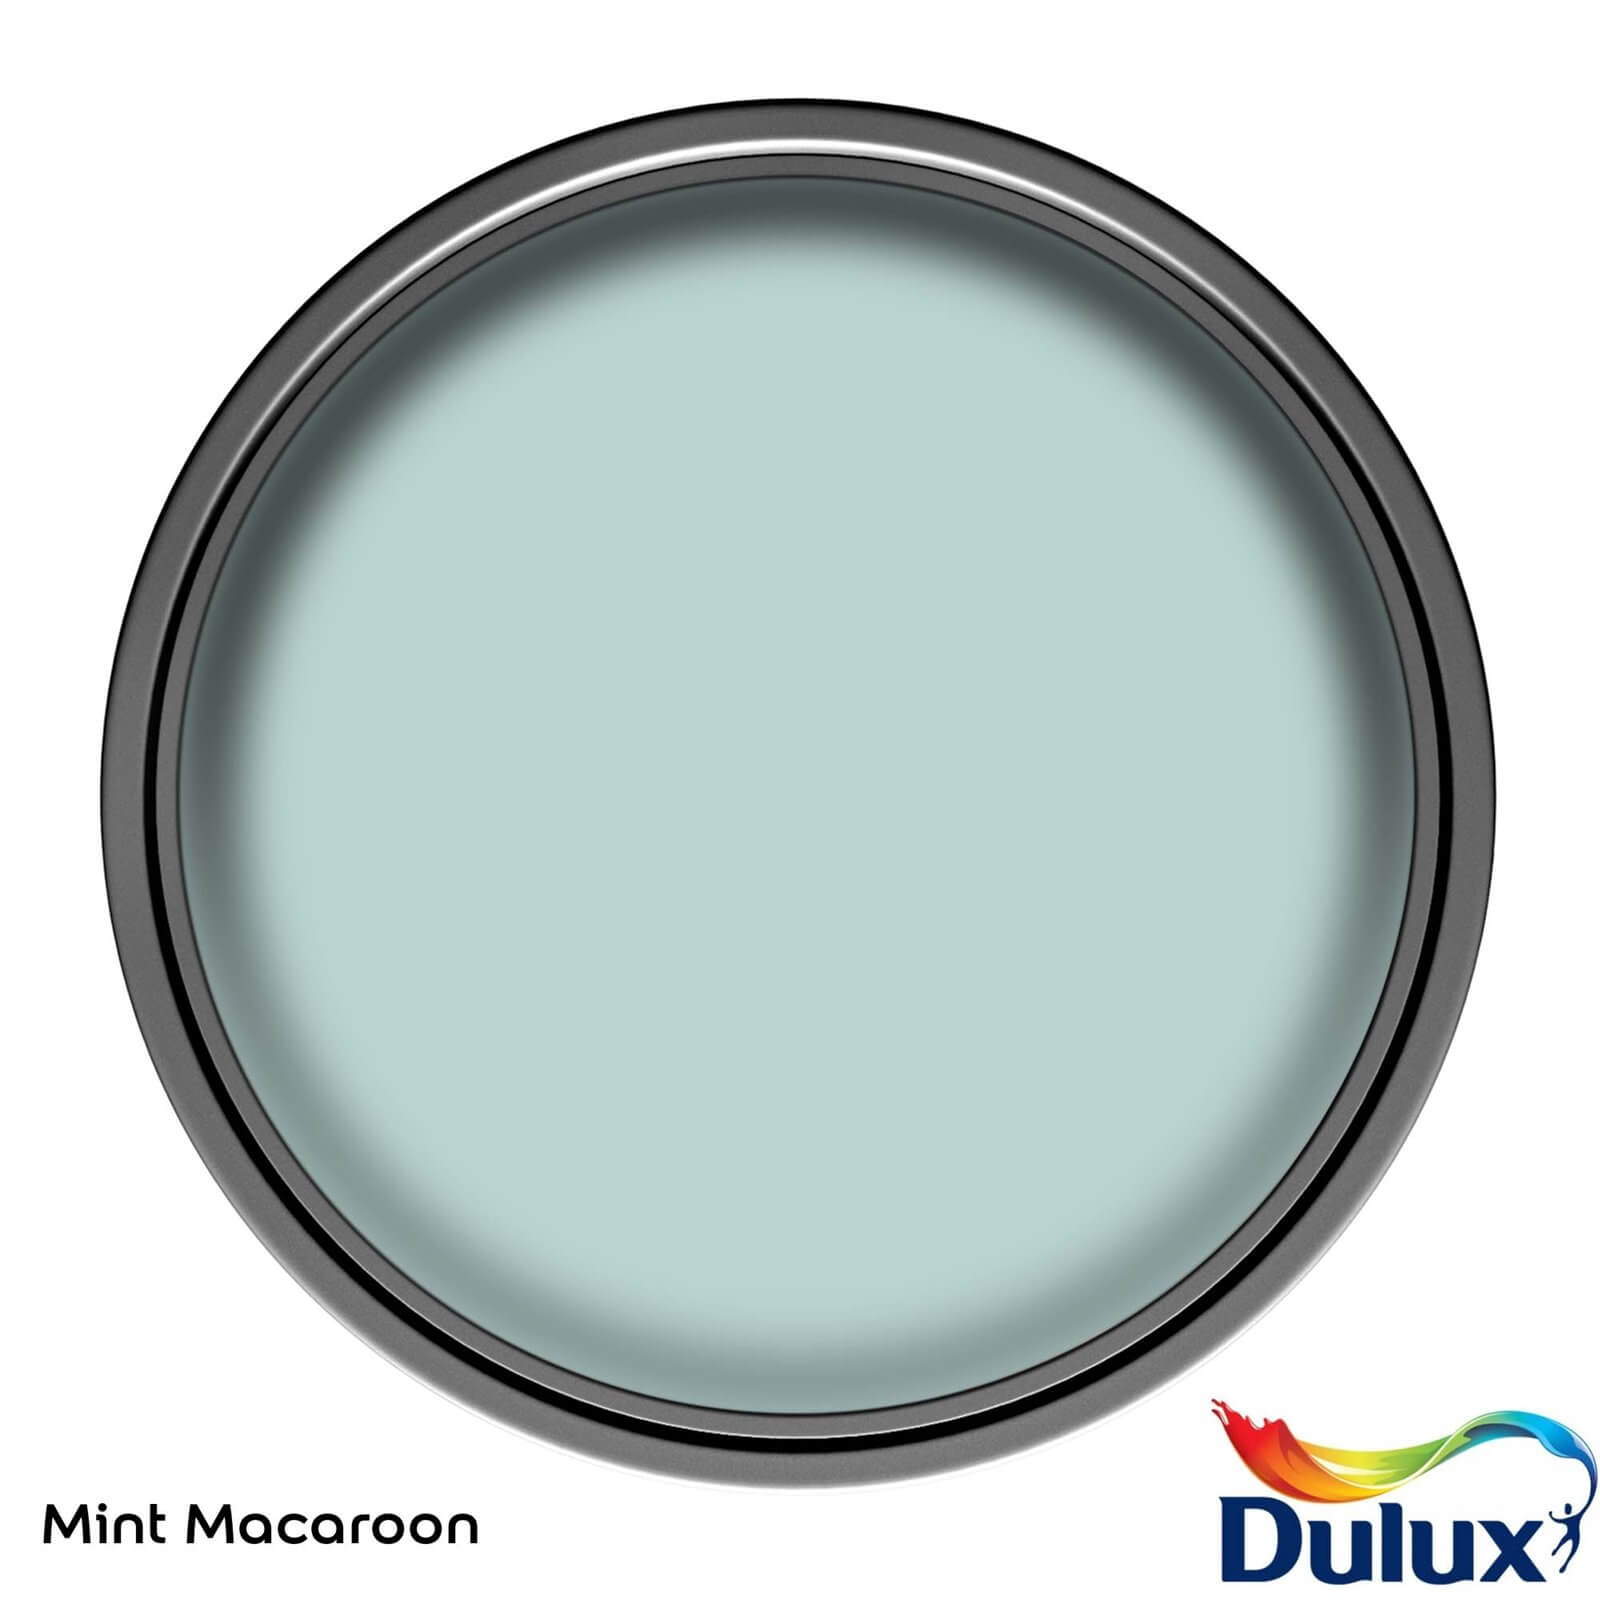 Dulux Easycare Kitchen Mint Macaroon Matt Paint - 2.5L